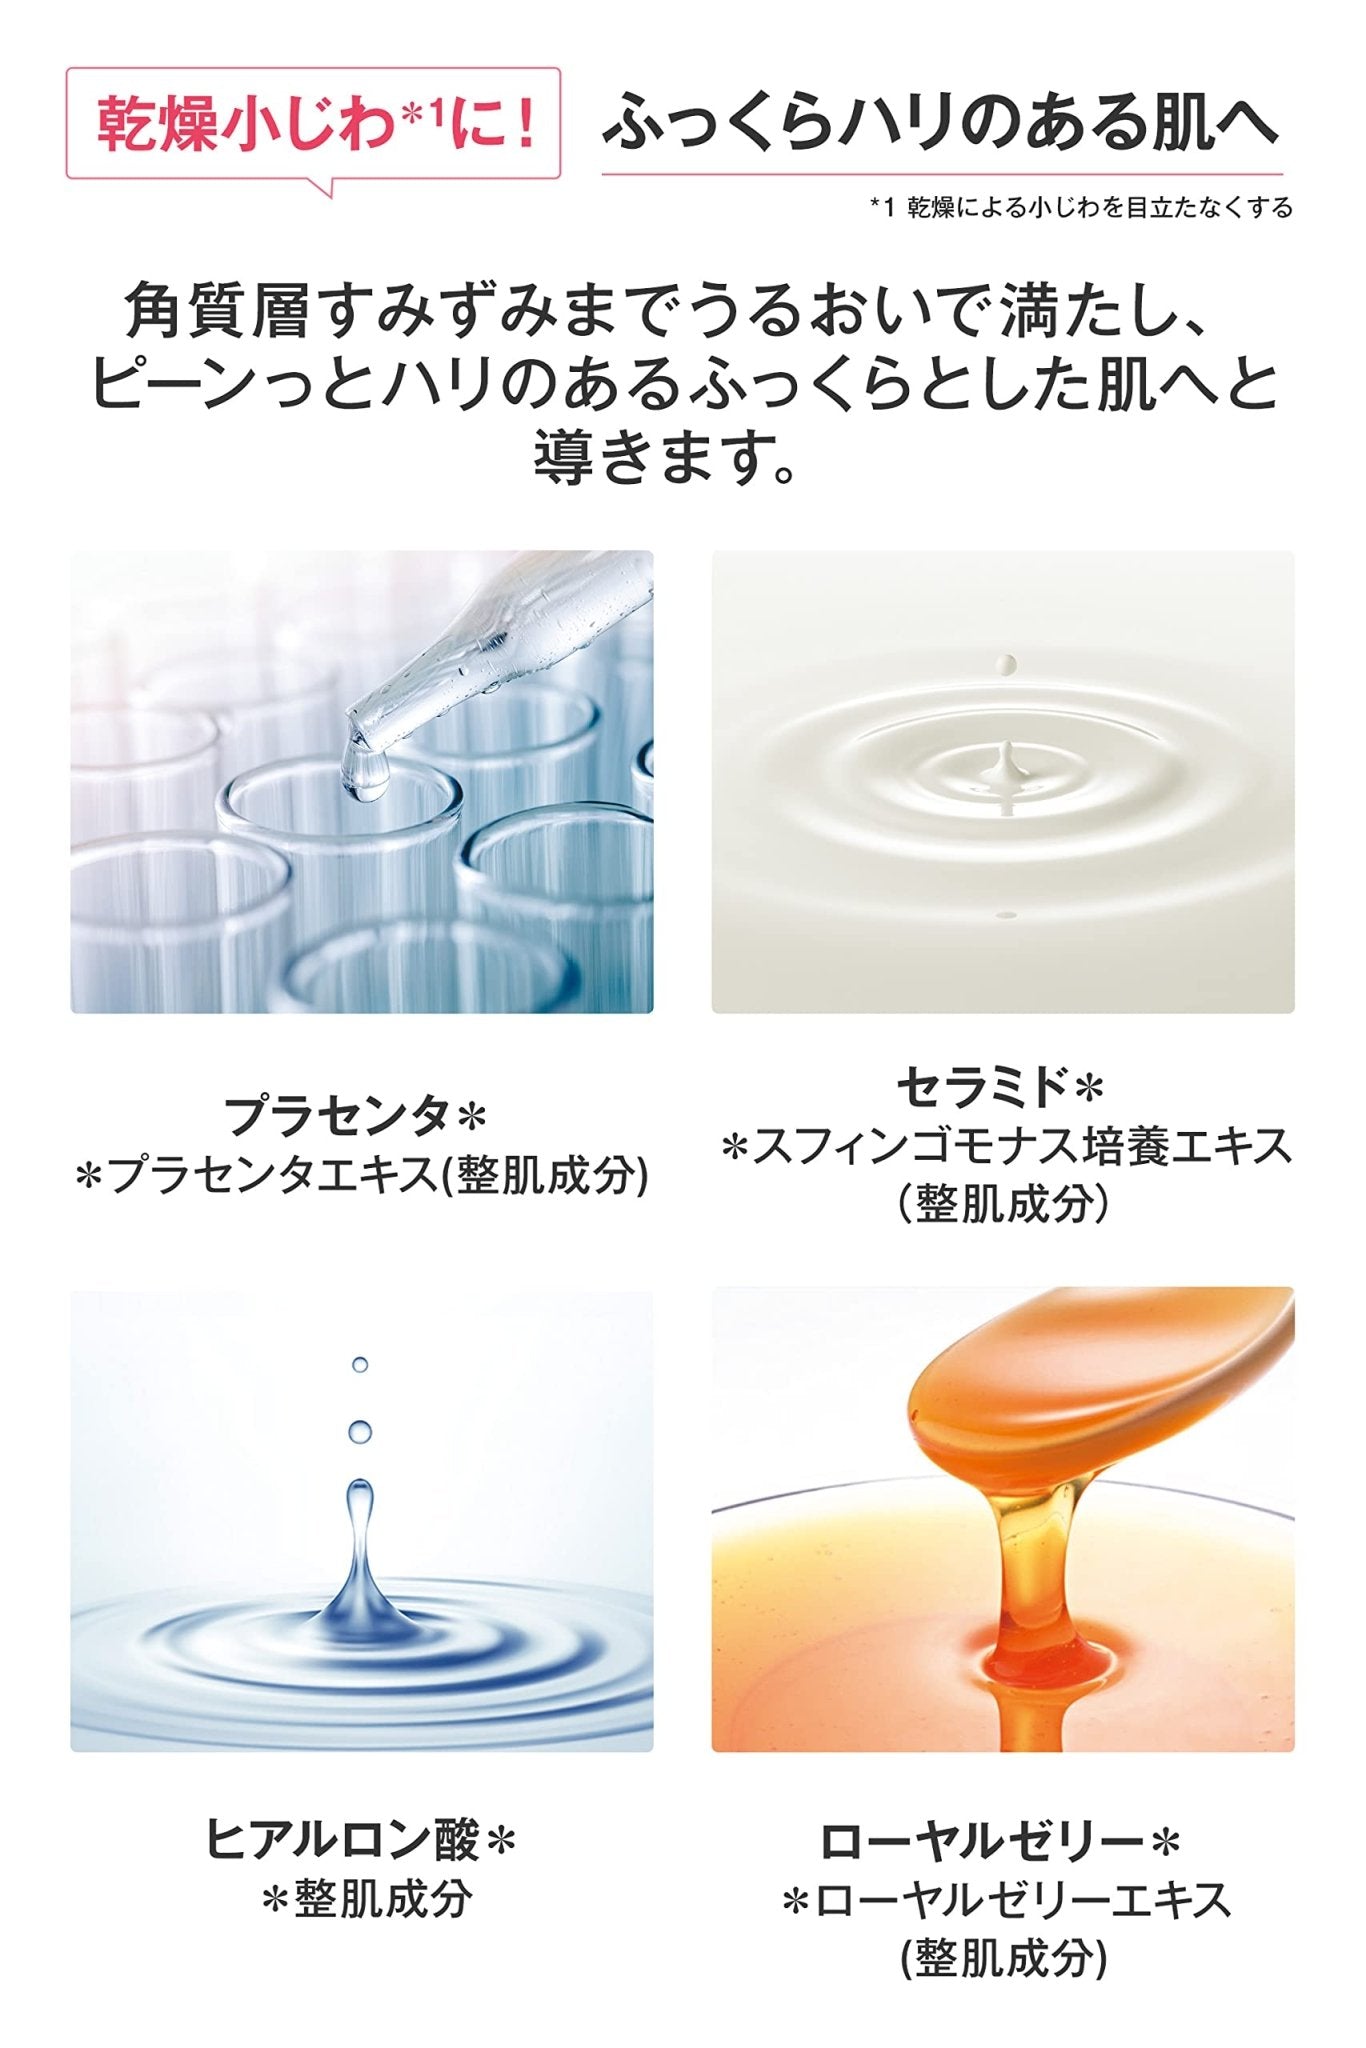 Cosmetex Roland Biyougeneki Premium Super Moist Skin Lotion Hc 185ml - Japanese Lotion For Dry Skin - YOYO JAPAN